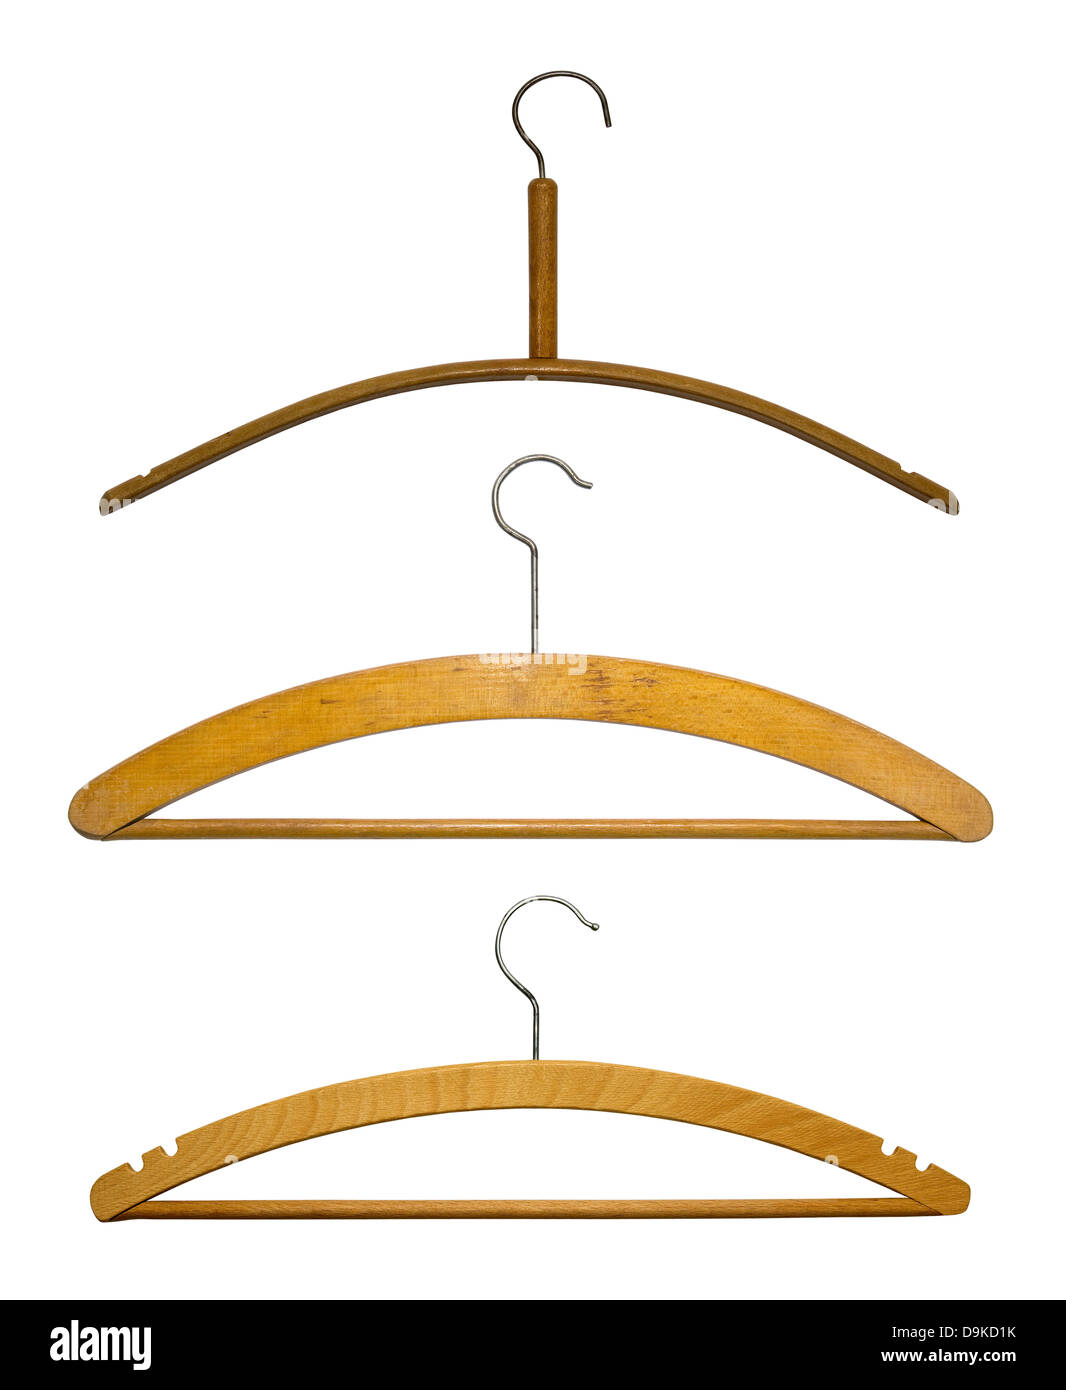 Hangers isolated on white Stock Photo